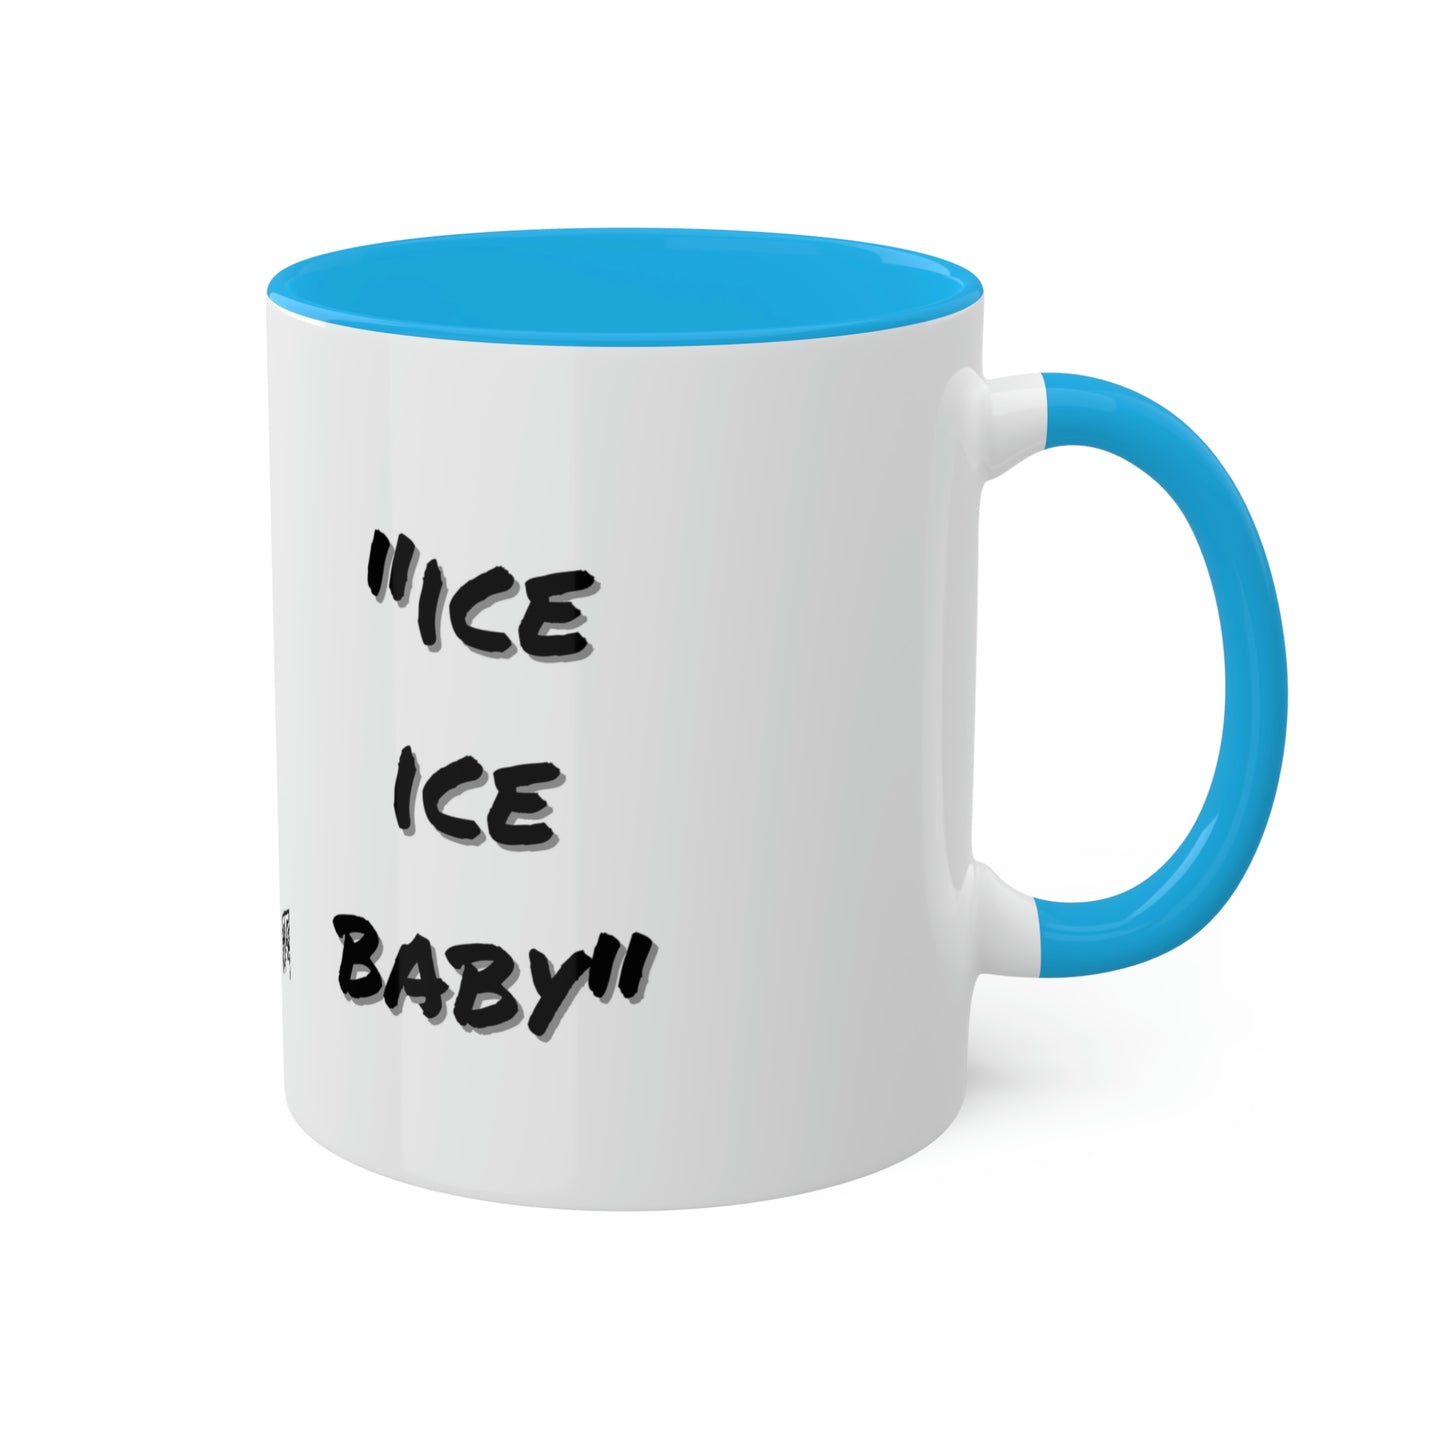 Vanilla Ice #IceIceBaby - Colorful Mugs, 11oz